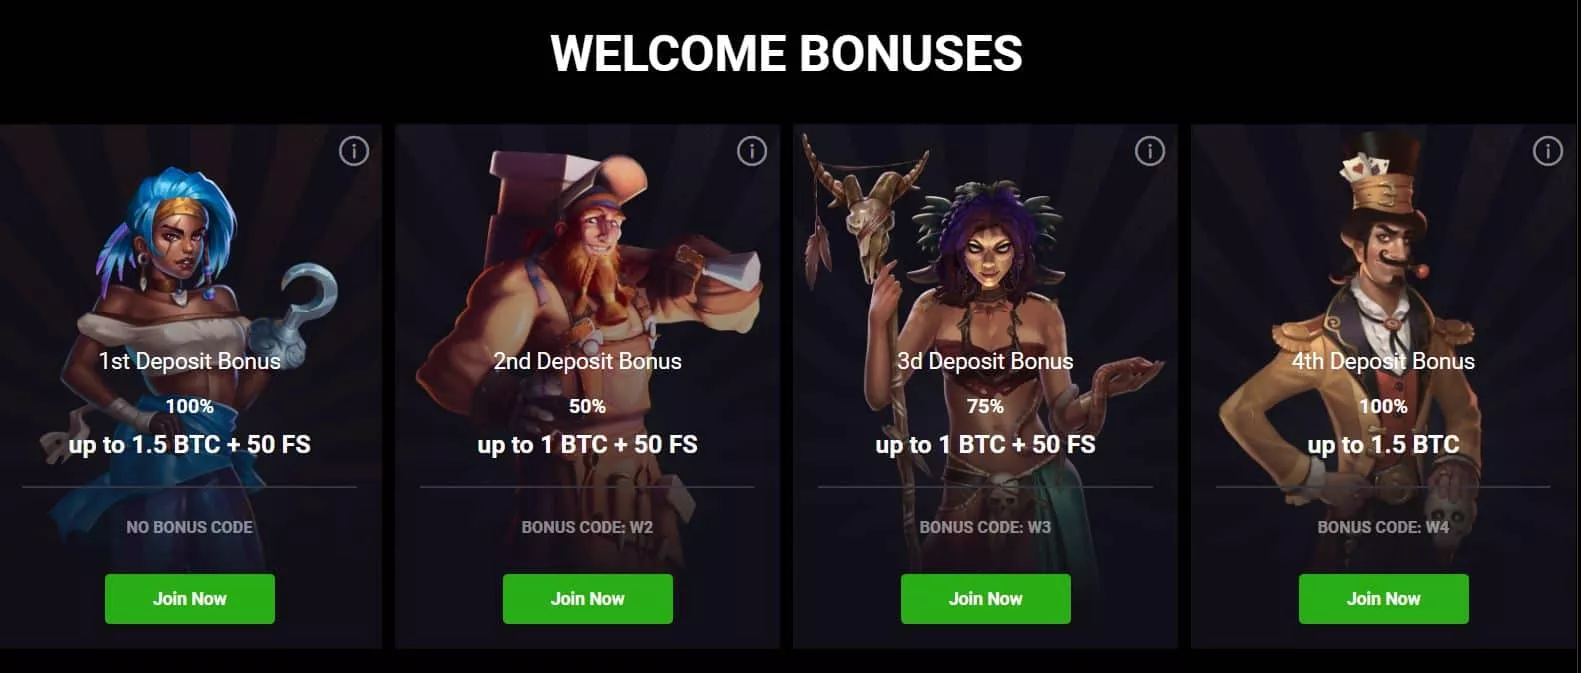 mirax casino welcome bonuses